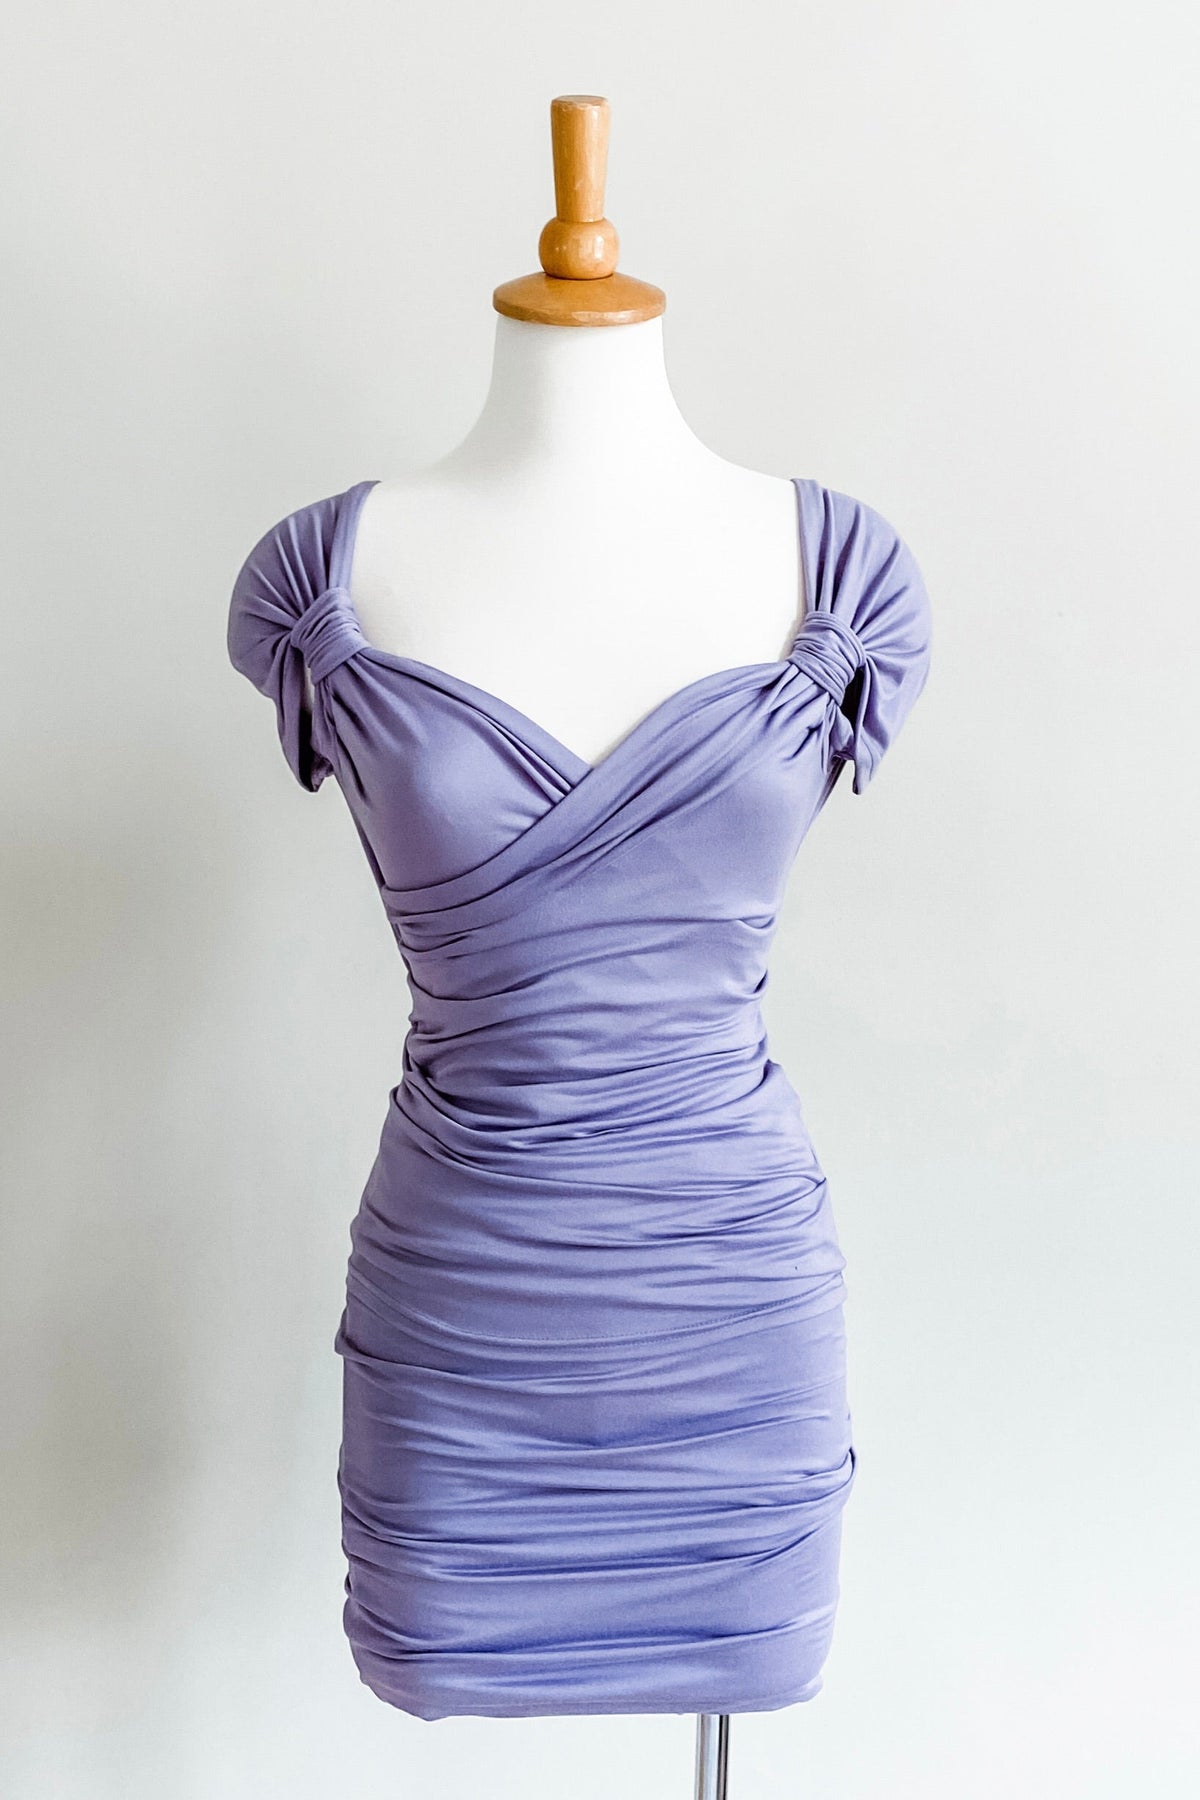 Diane Kroe Cross Top (Purple) - Warm Weather Capsule Collection